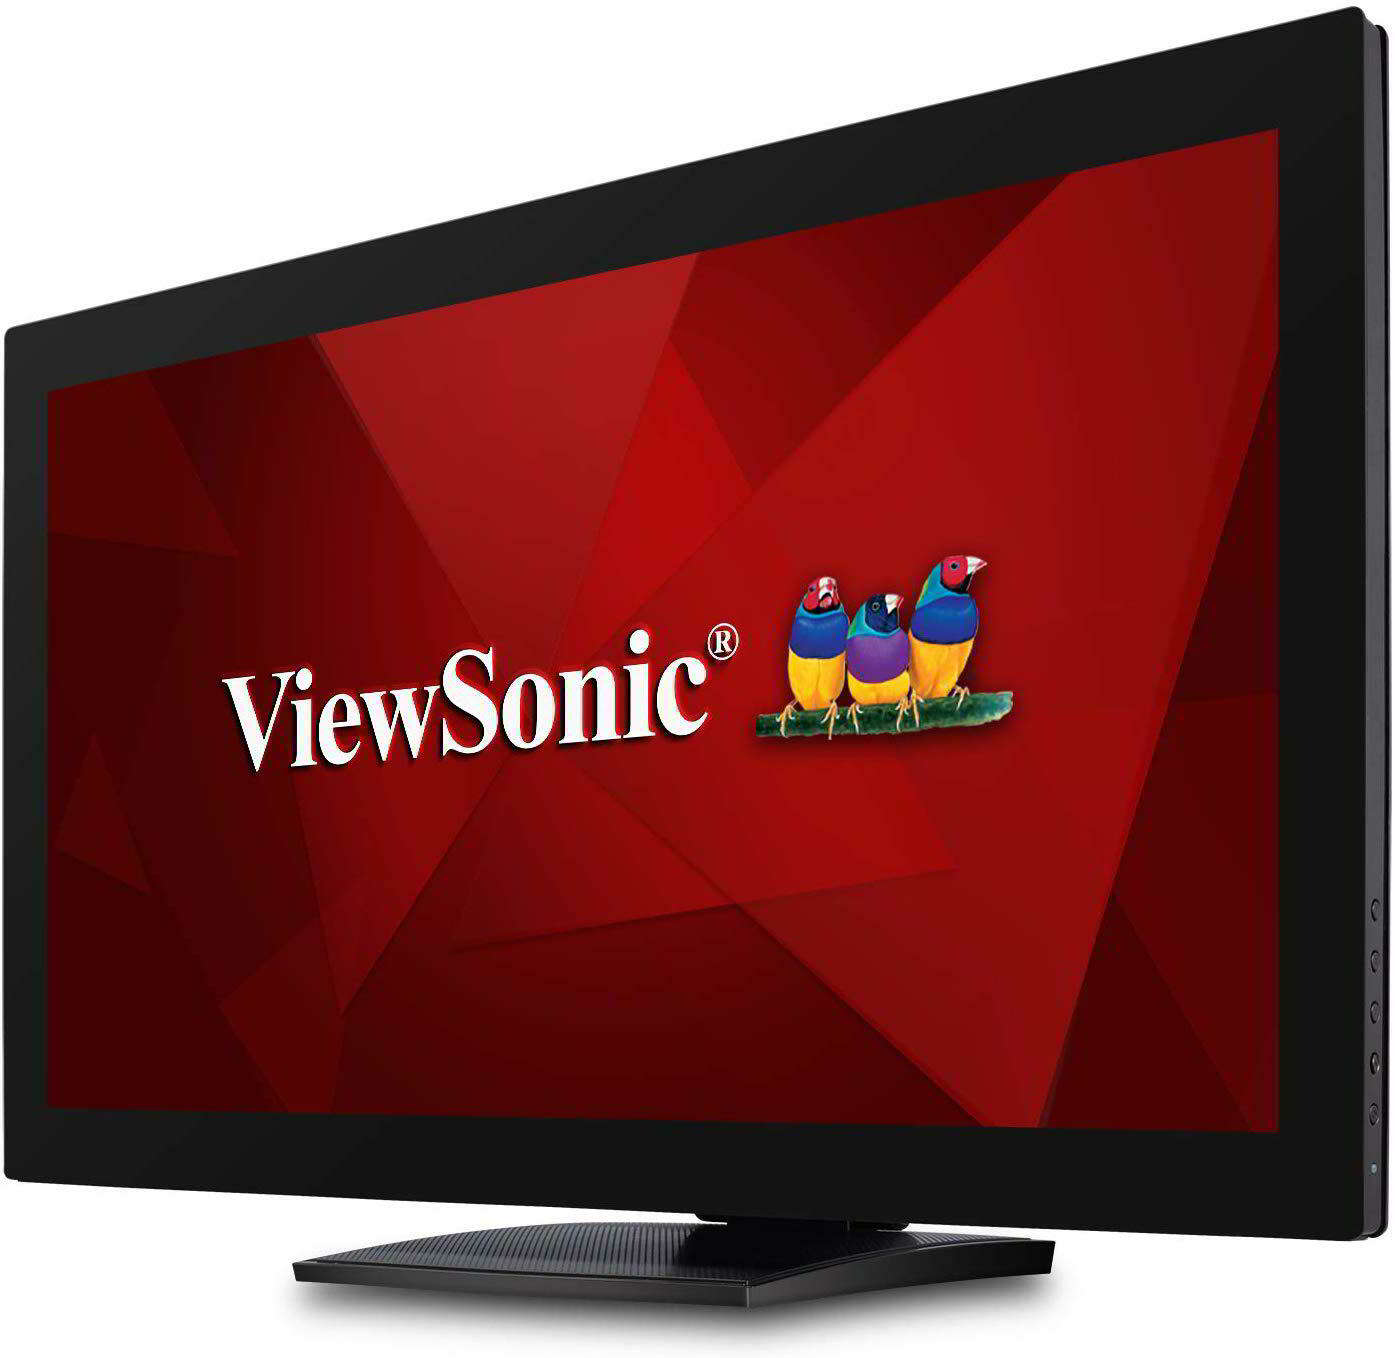 Viewsonic 27" td2760 monitor